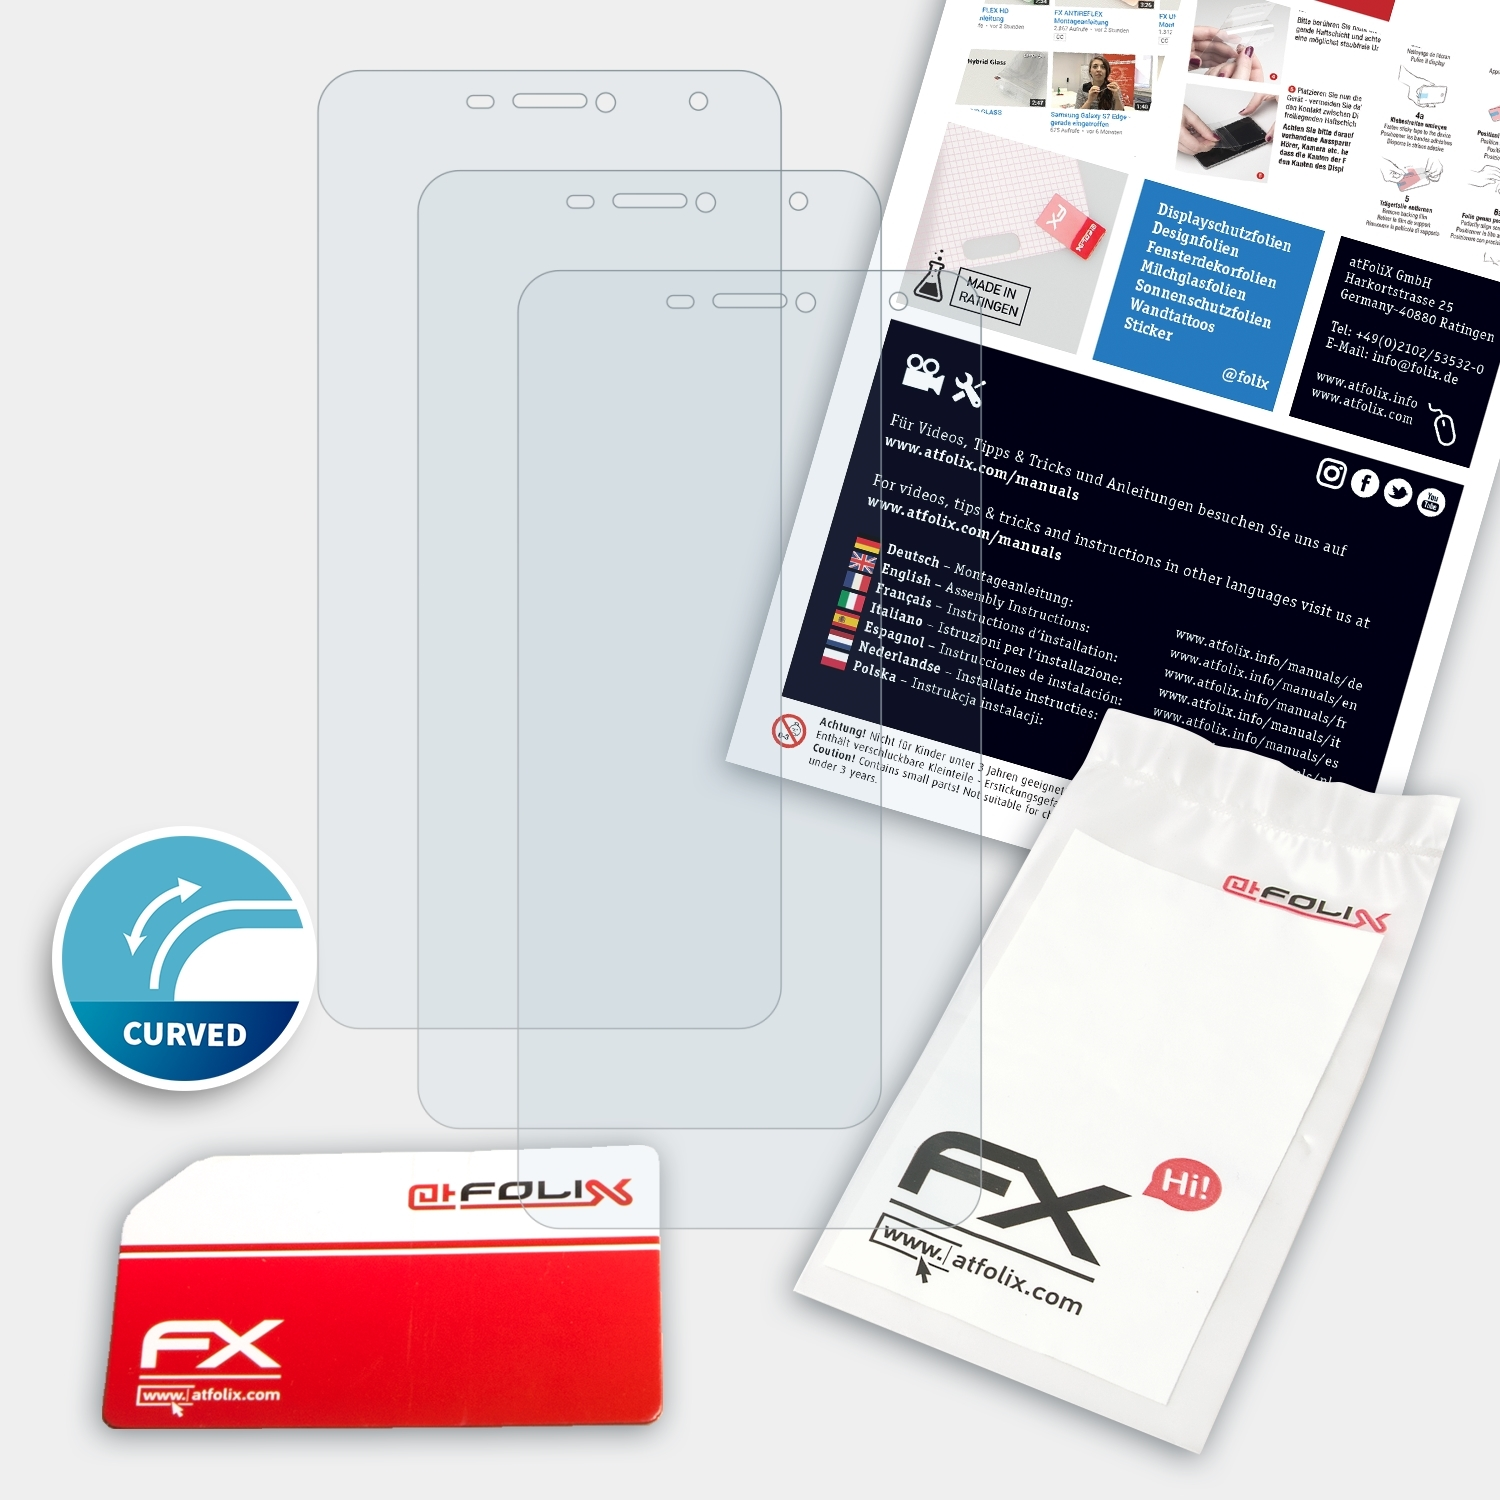 Doogee 3x Pro) FX-ActiFleX Displayschutz(für X7 ATFOLIX